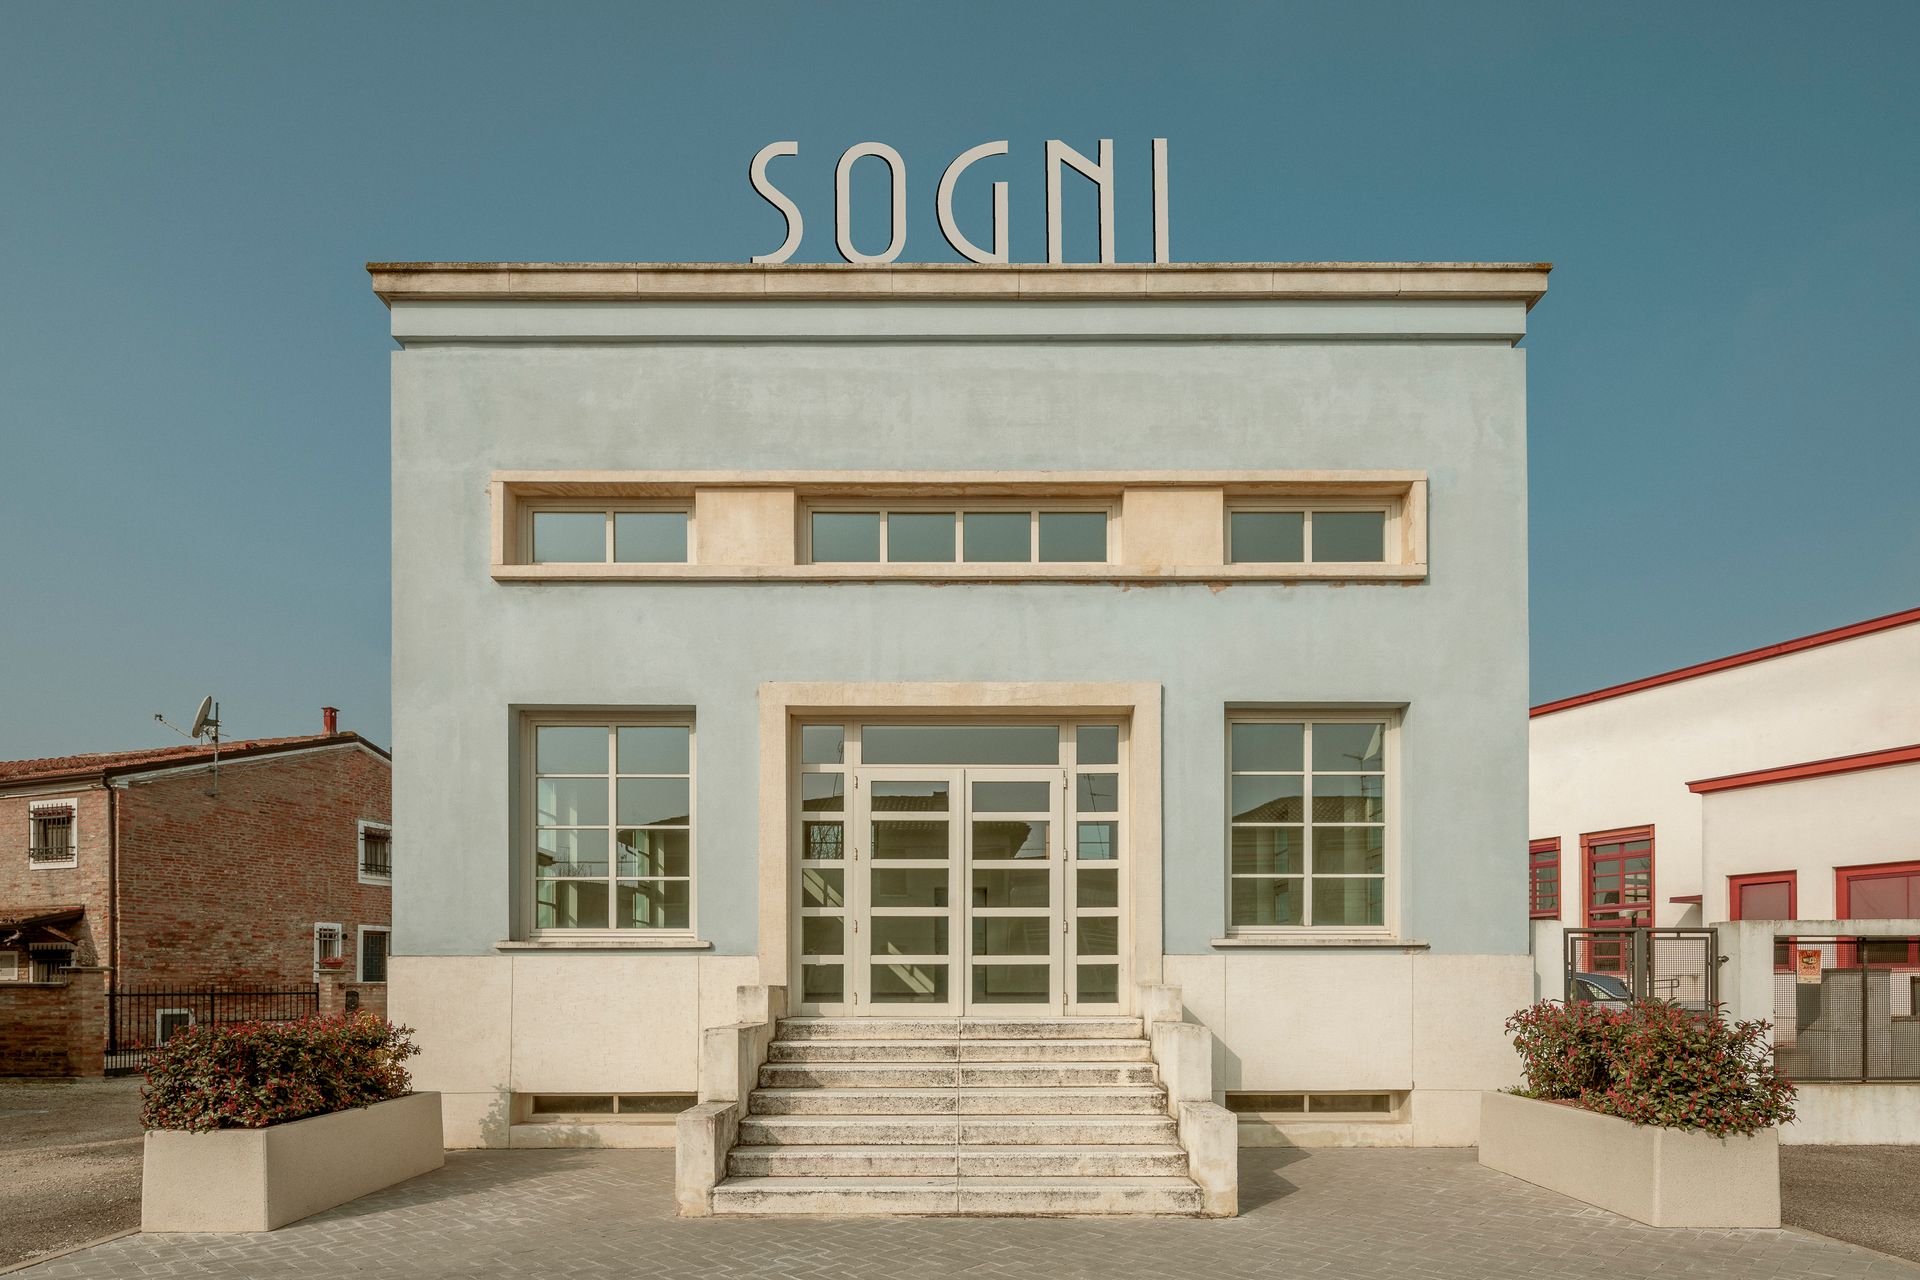 Reportage by photographer Luca Argenton, Tresigallo, Ferrara, Emilia Romagna. Officina Magisafi architecture design studio - photo 4